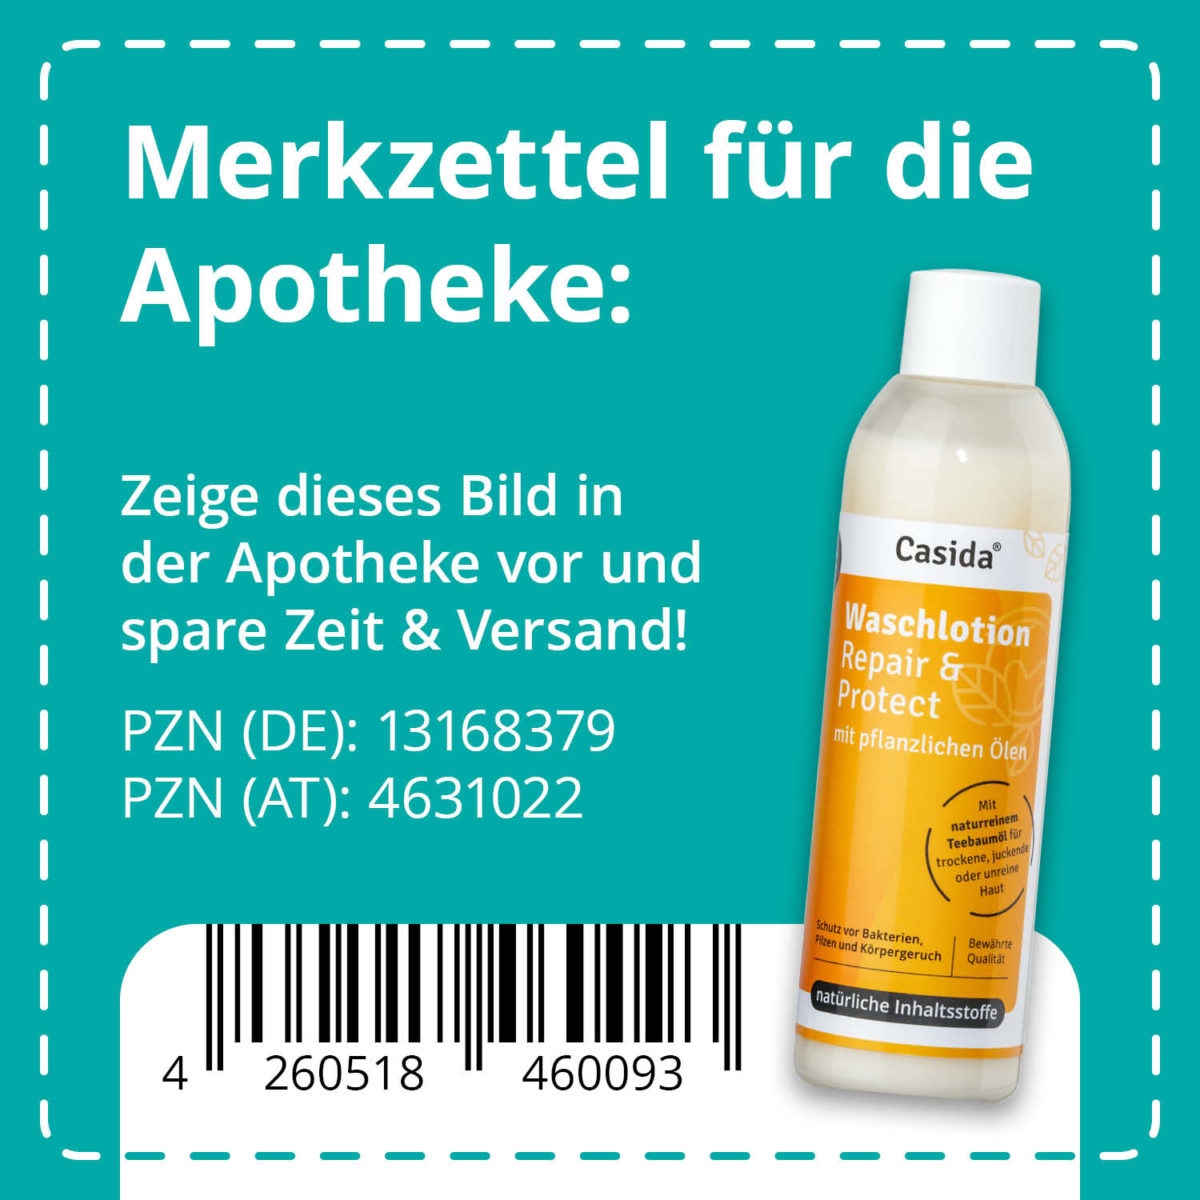 Casida Waschlotion Repair & Protect 200 ml 13168379 PZN Apotheke Nagelpilz Fußpilz5